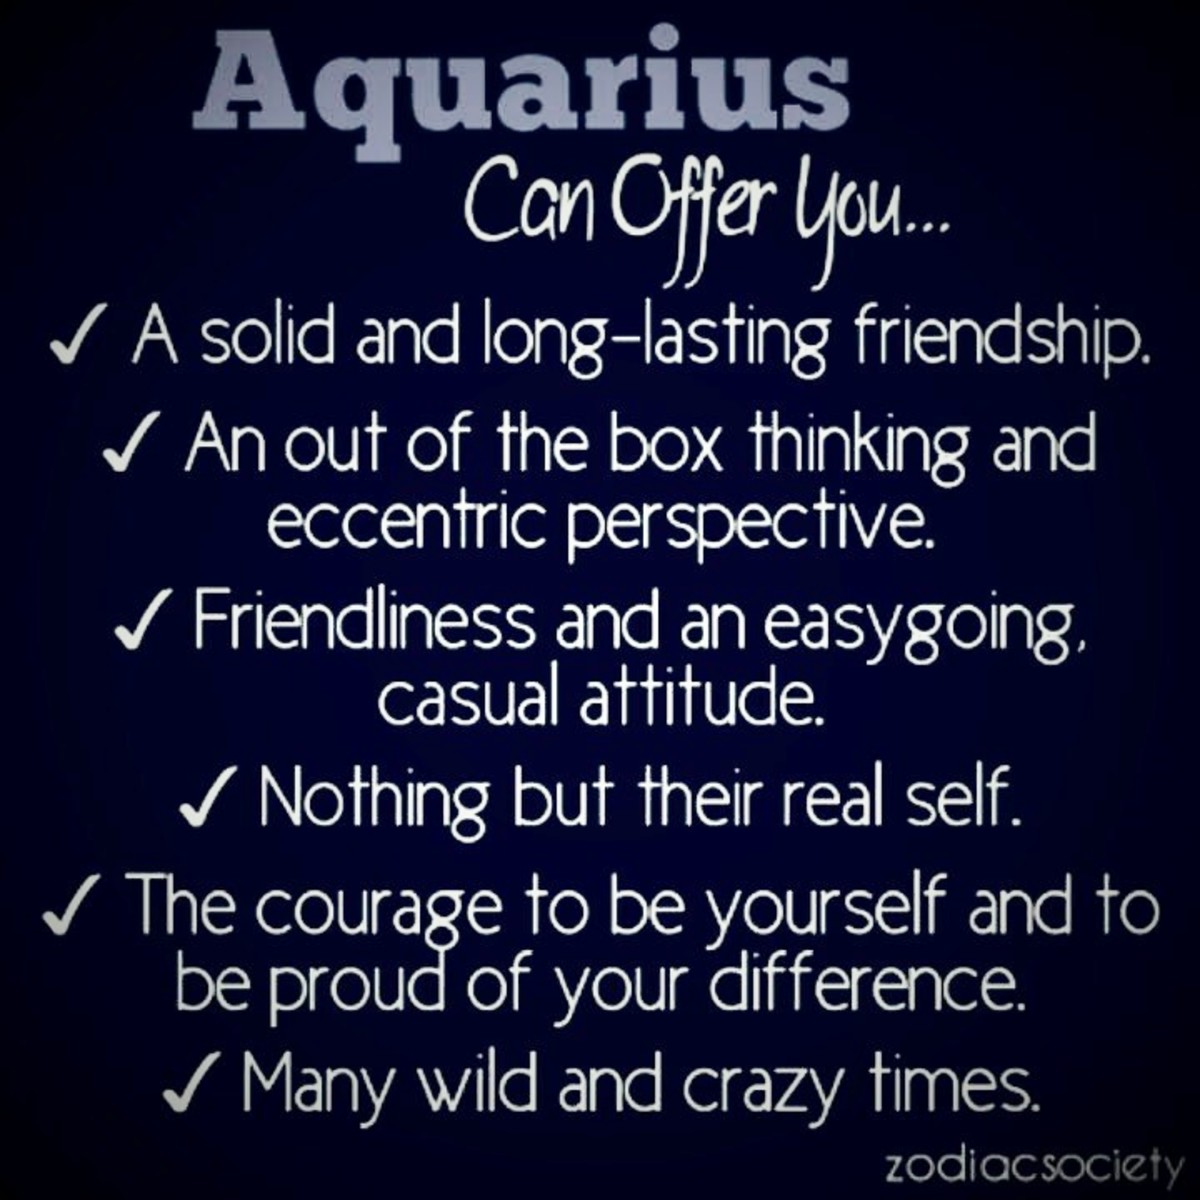 When do man to you ignores aquarius what When Aquarius